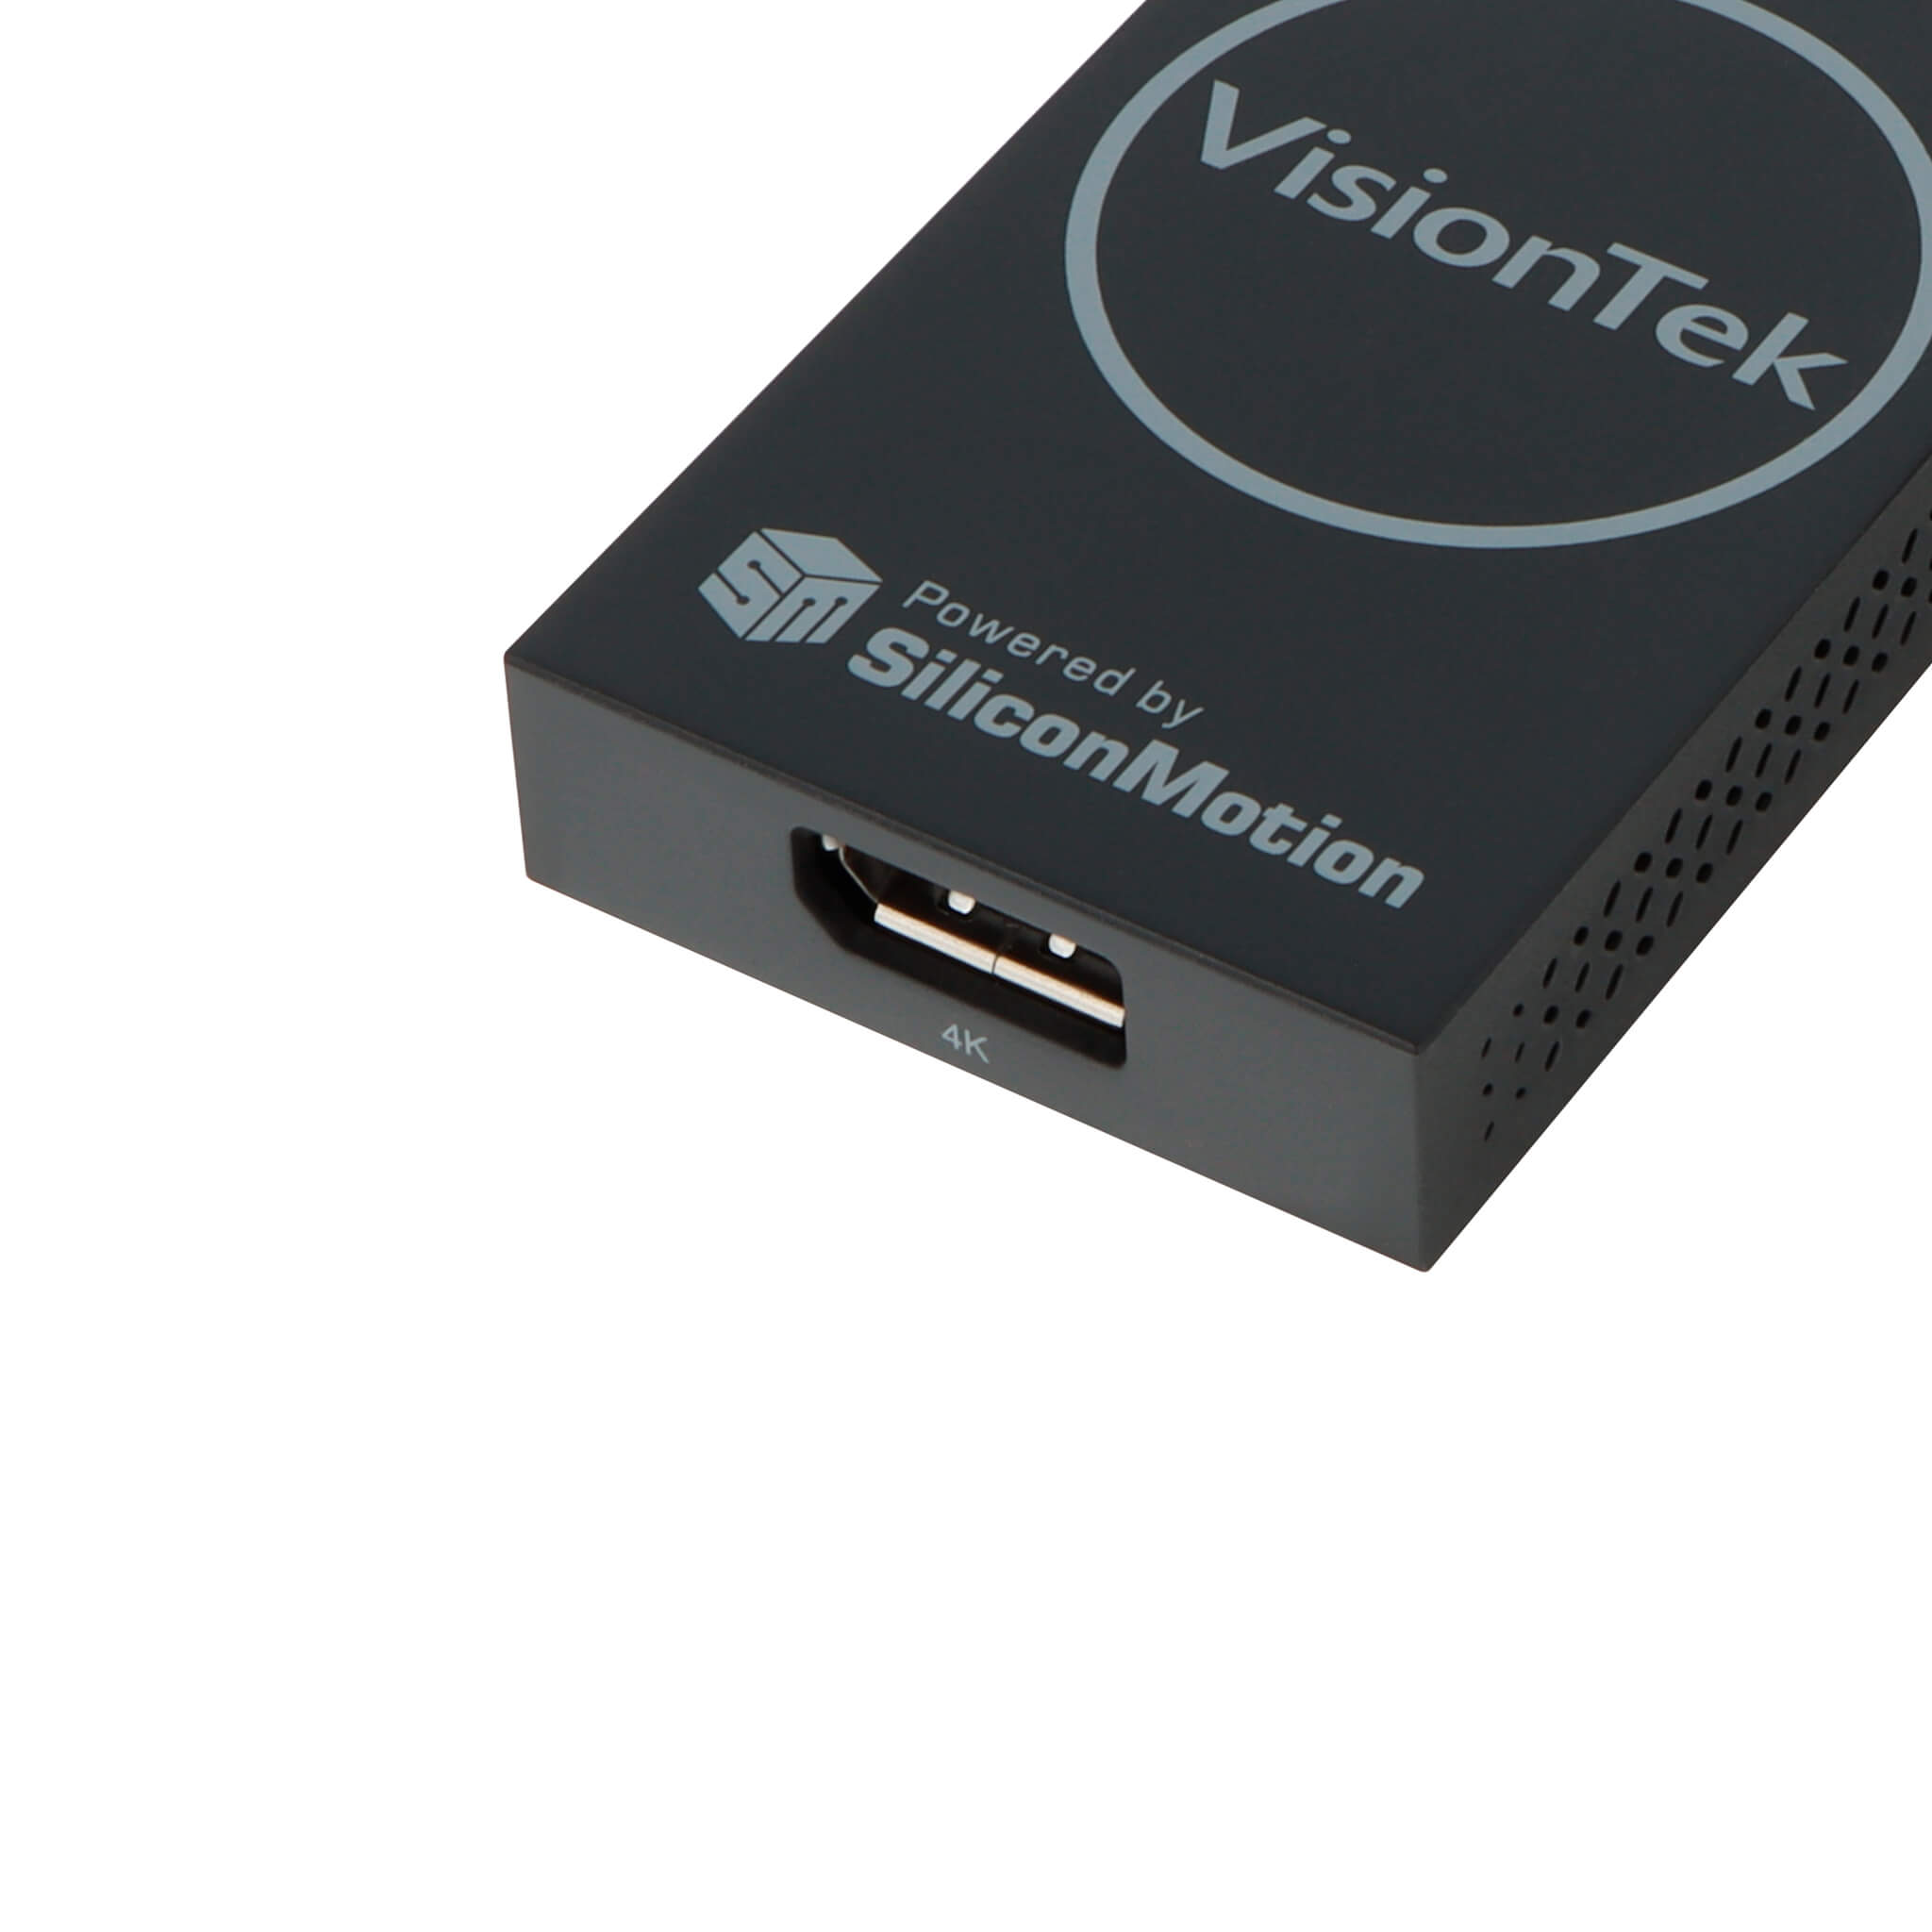 VT80 USB 3.0 to DisplayPort Adapter